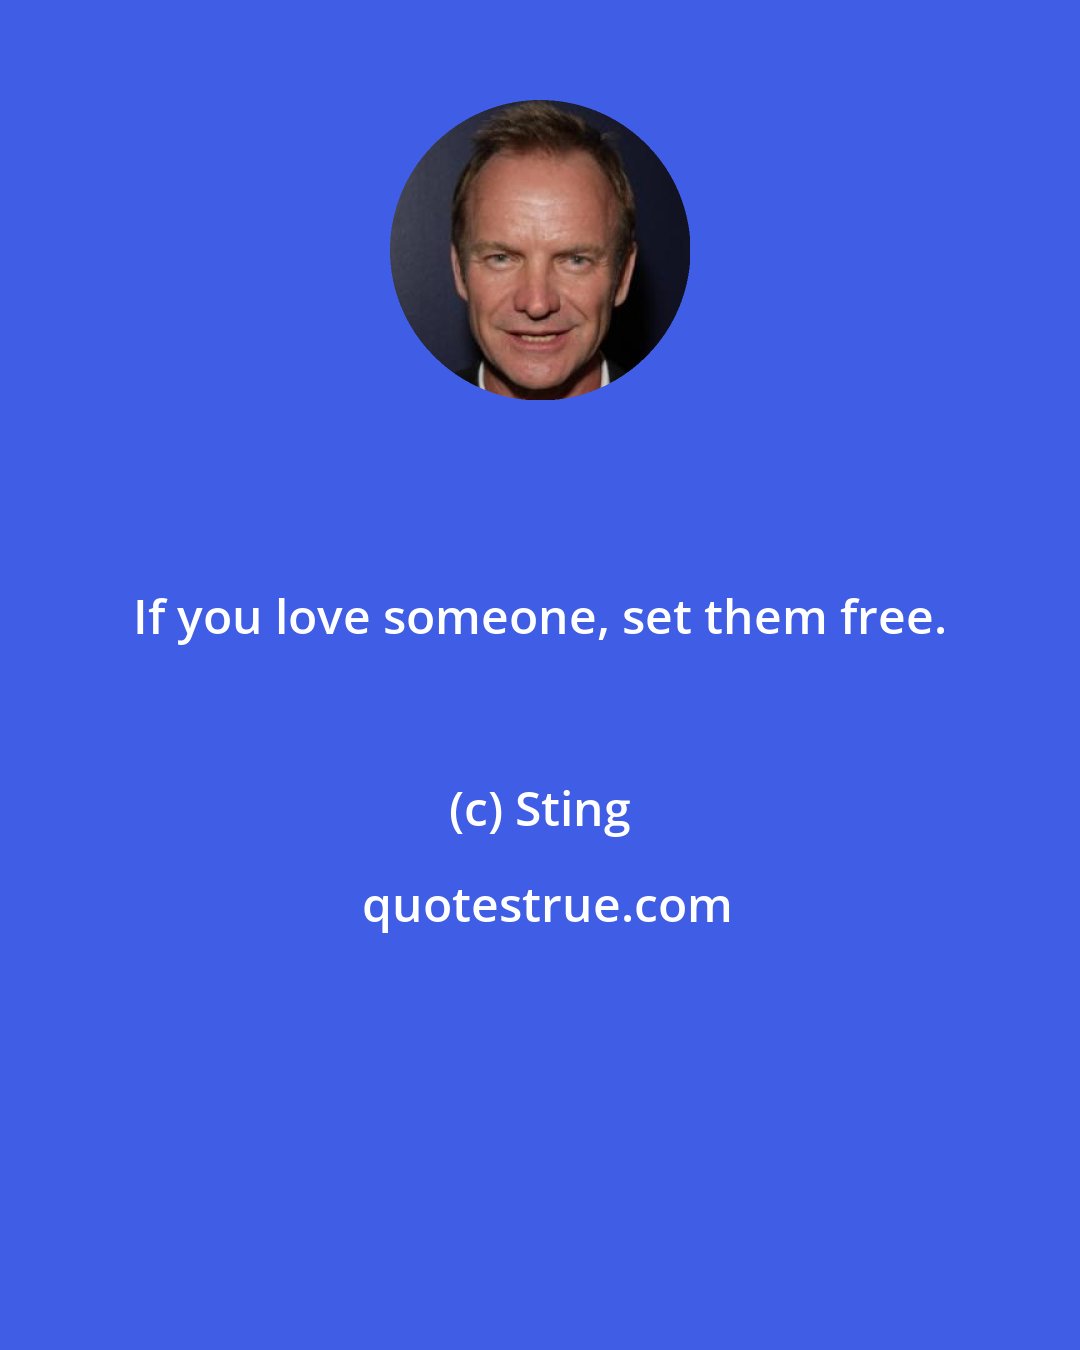 Sting: If you love someone, set them free.